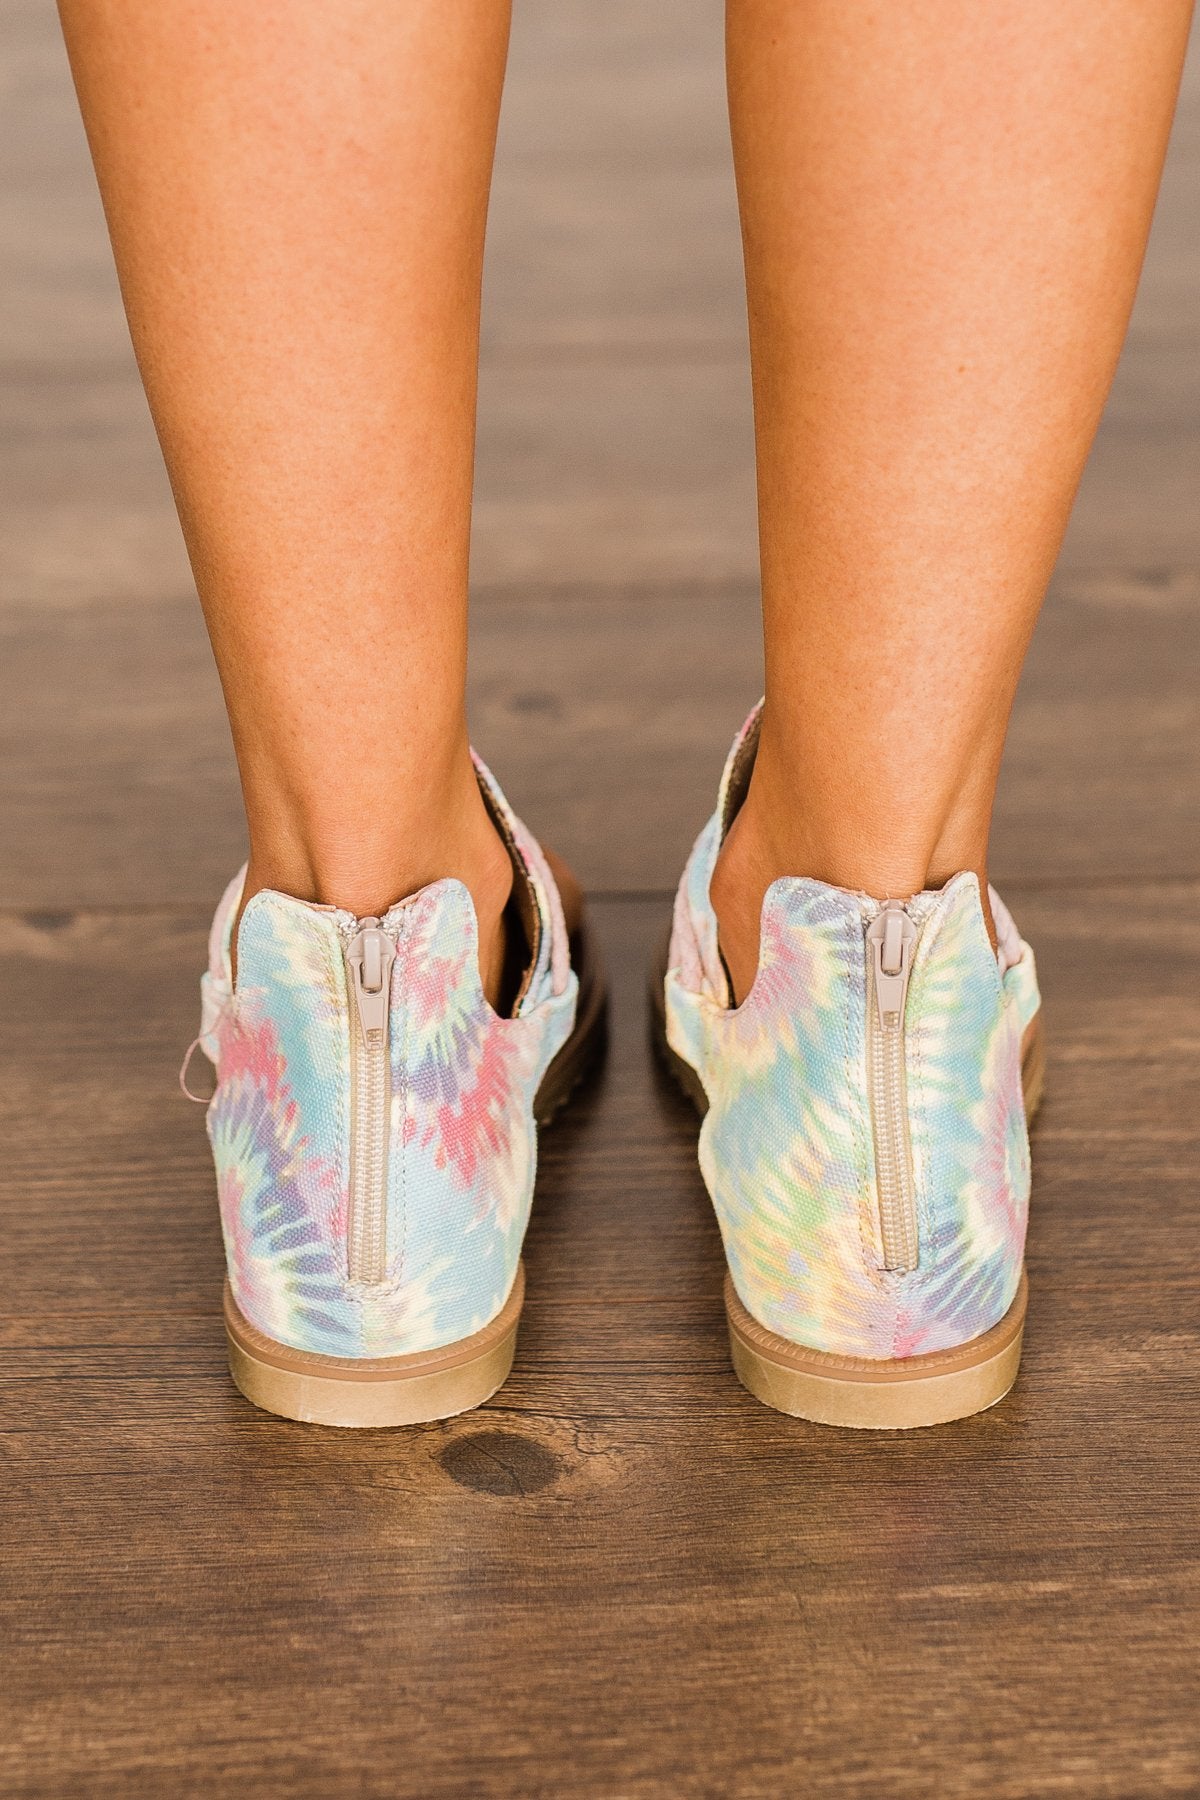 Very G Dusk Sandals- Pastel